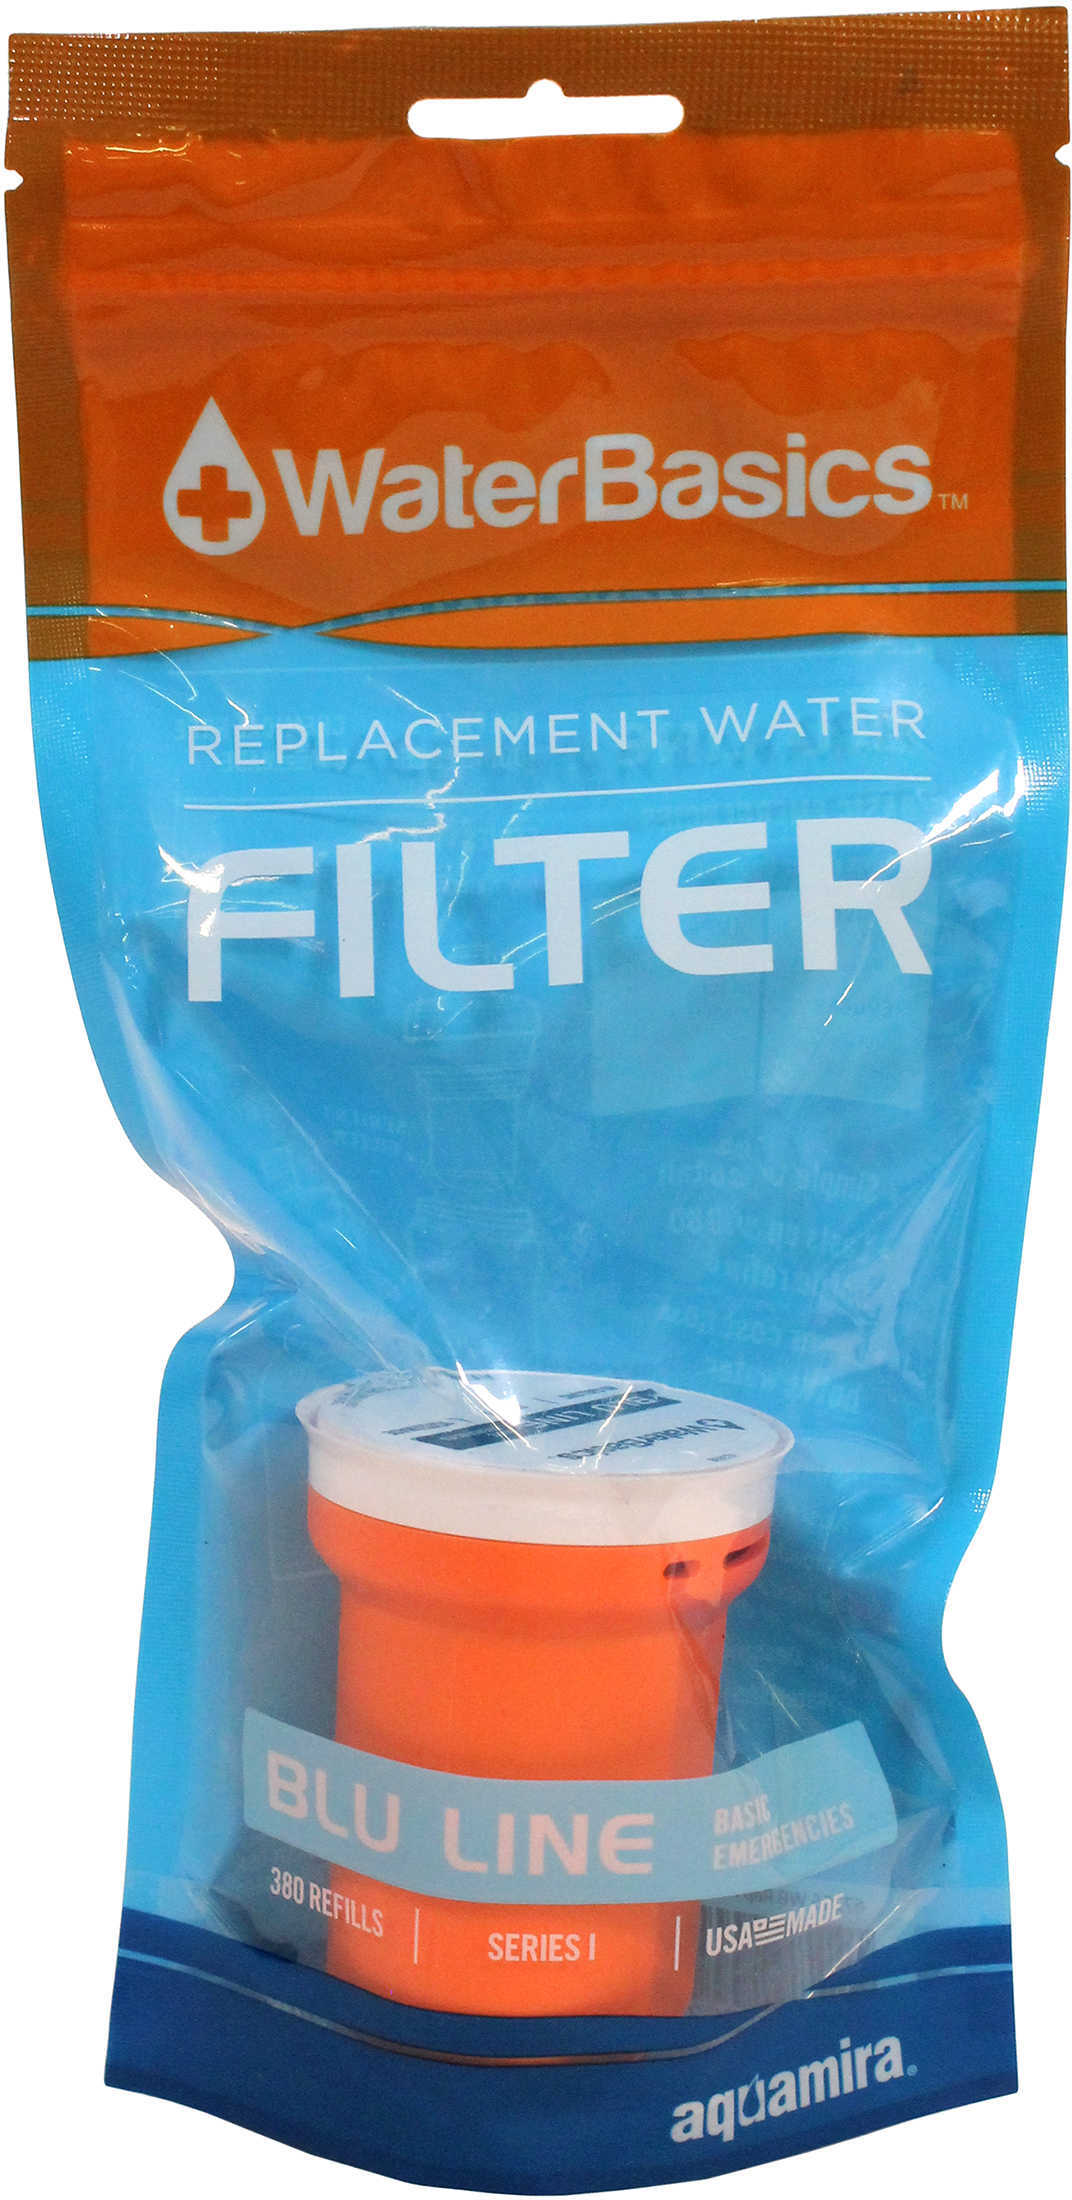 WaterBasics Replacement Filter